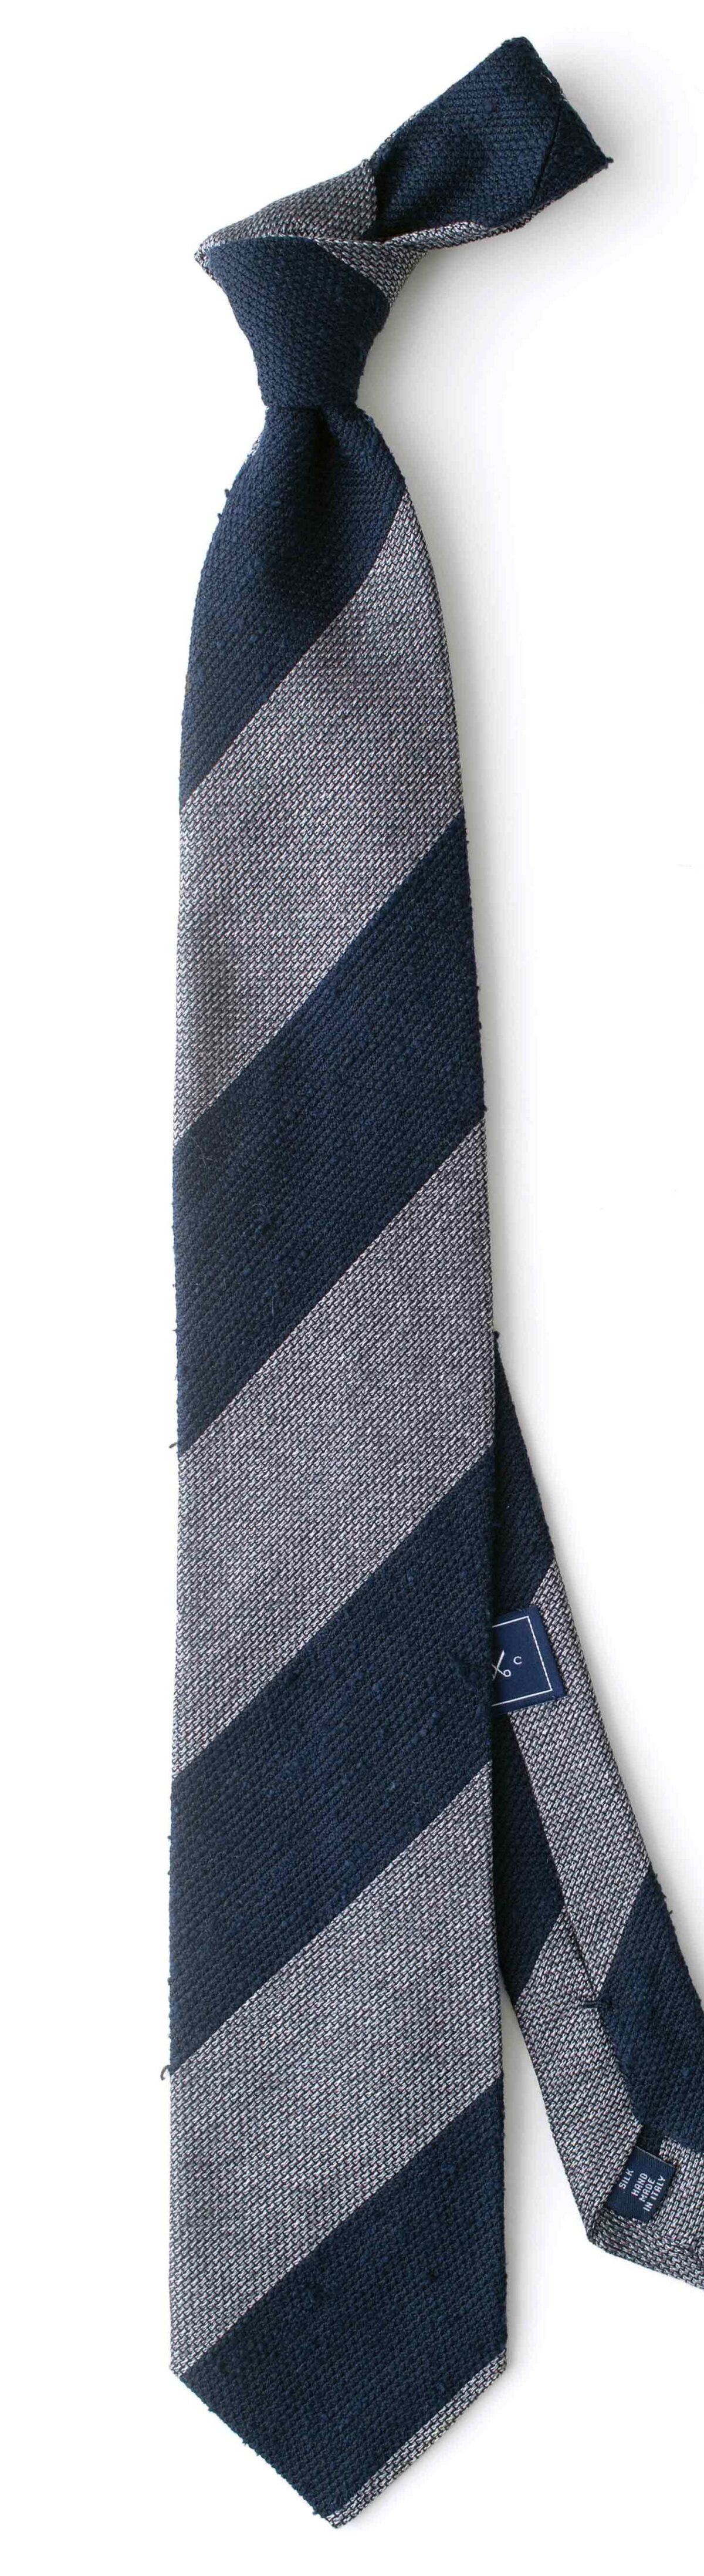 Navy and Grey Striped Shantung Grenadine Tie